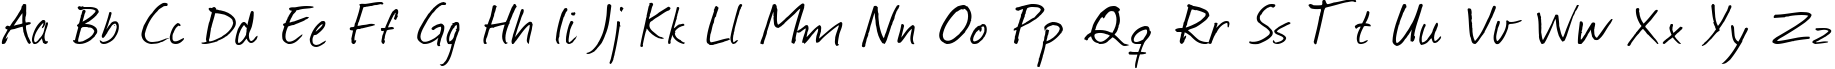 Пример написания английского алфавита шрифтом Journal